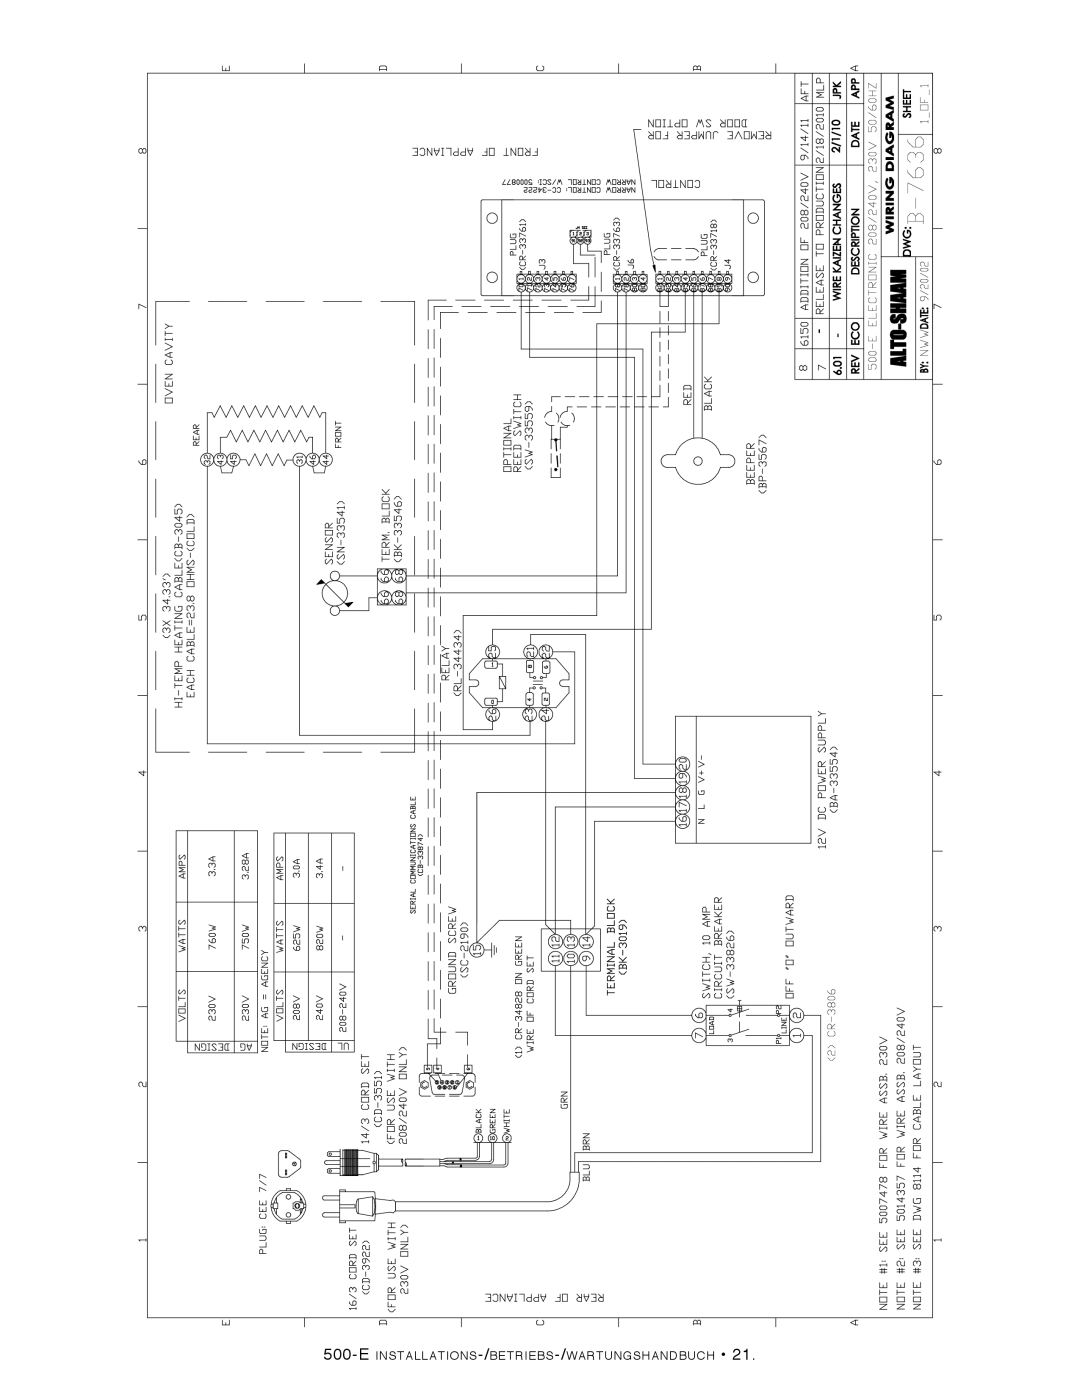 Alto-Shaam 500-E/HD manual E installations-/betriebs-/wartungshandbuch 